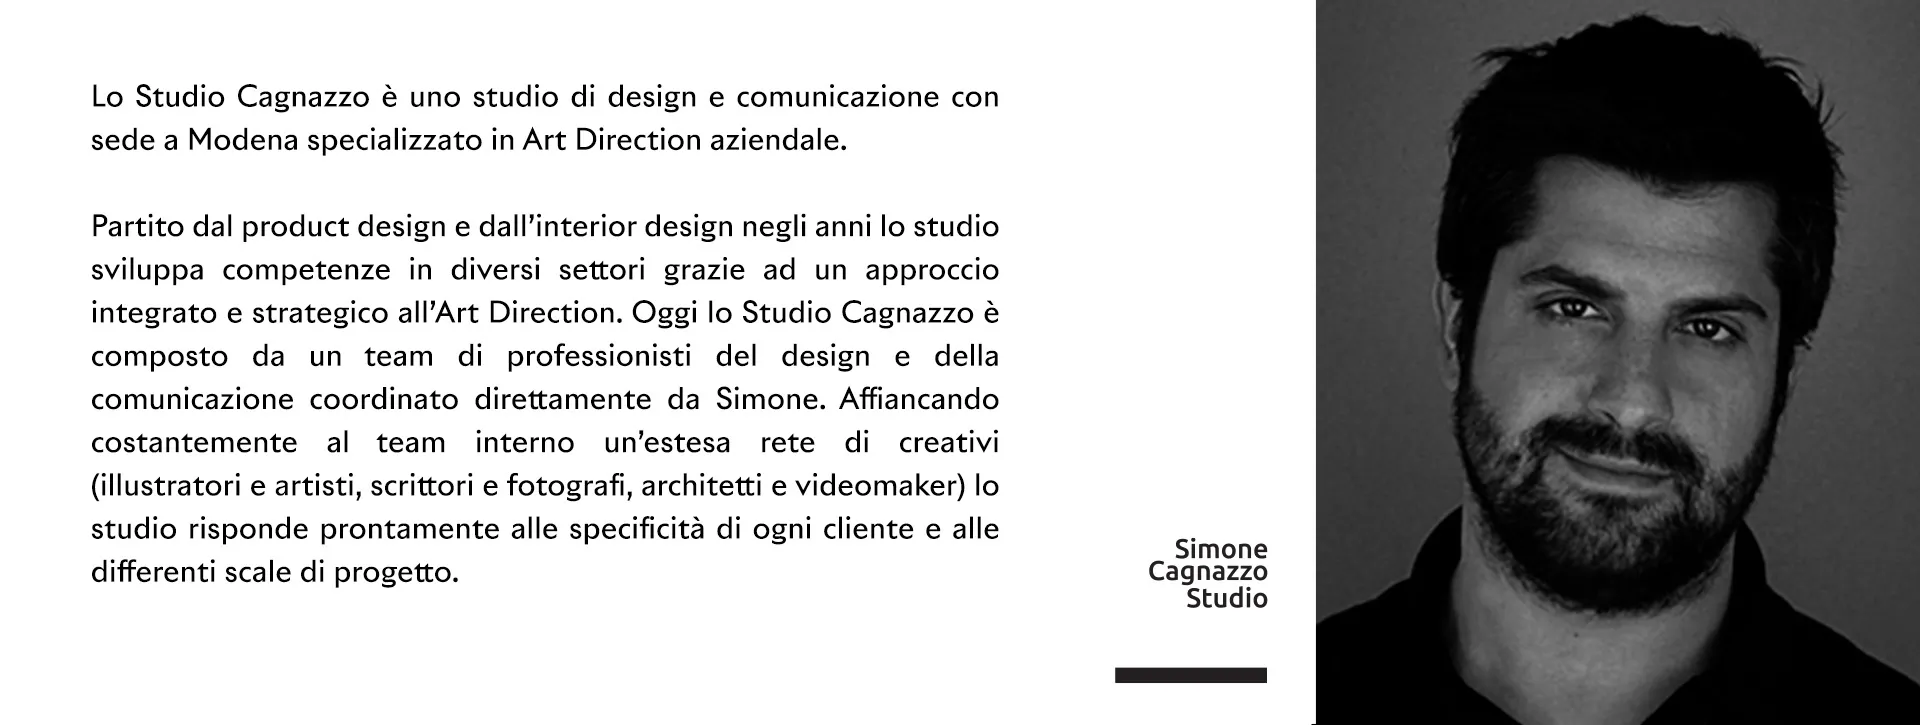 Simone Cagnazzo Studio - Art Direction